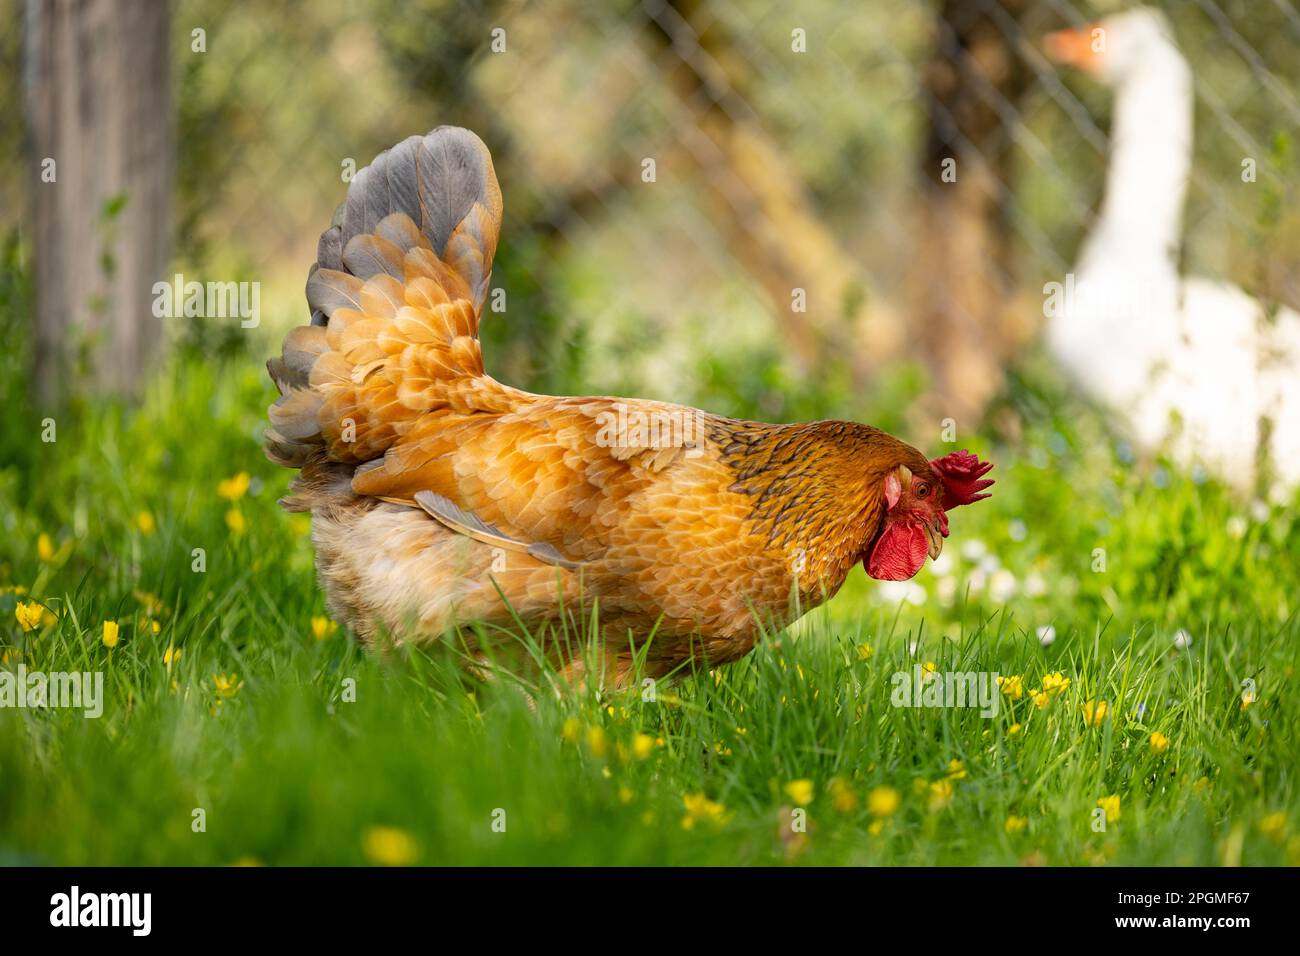 Empordanesa breed (gallina de raça empordanesa) hen roaming free and feeding in the grass (Gallus gallus domesticus). El Baix Empordà, Girona. Stock Photo